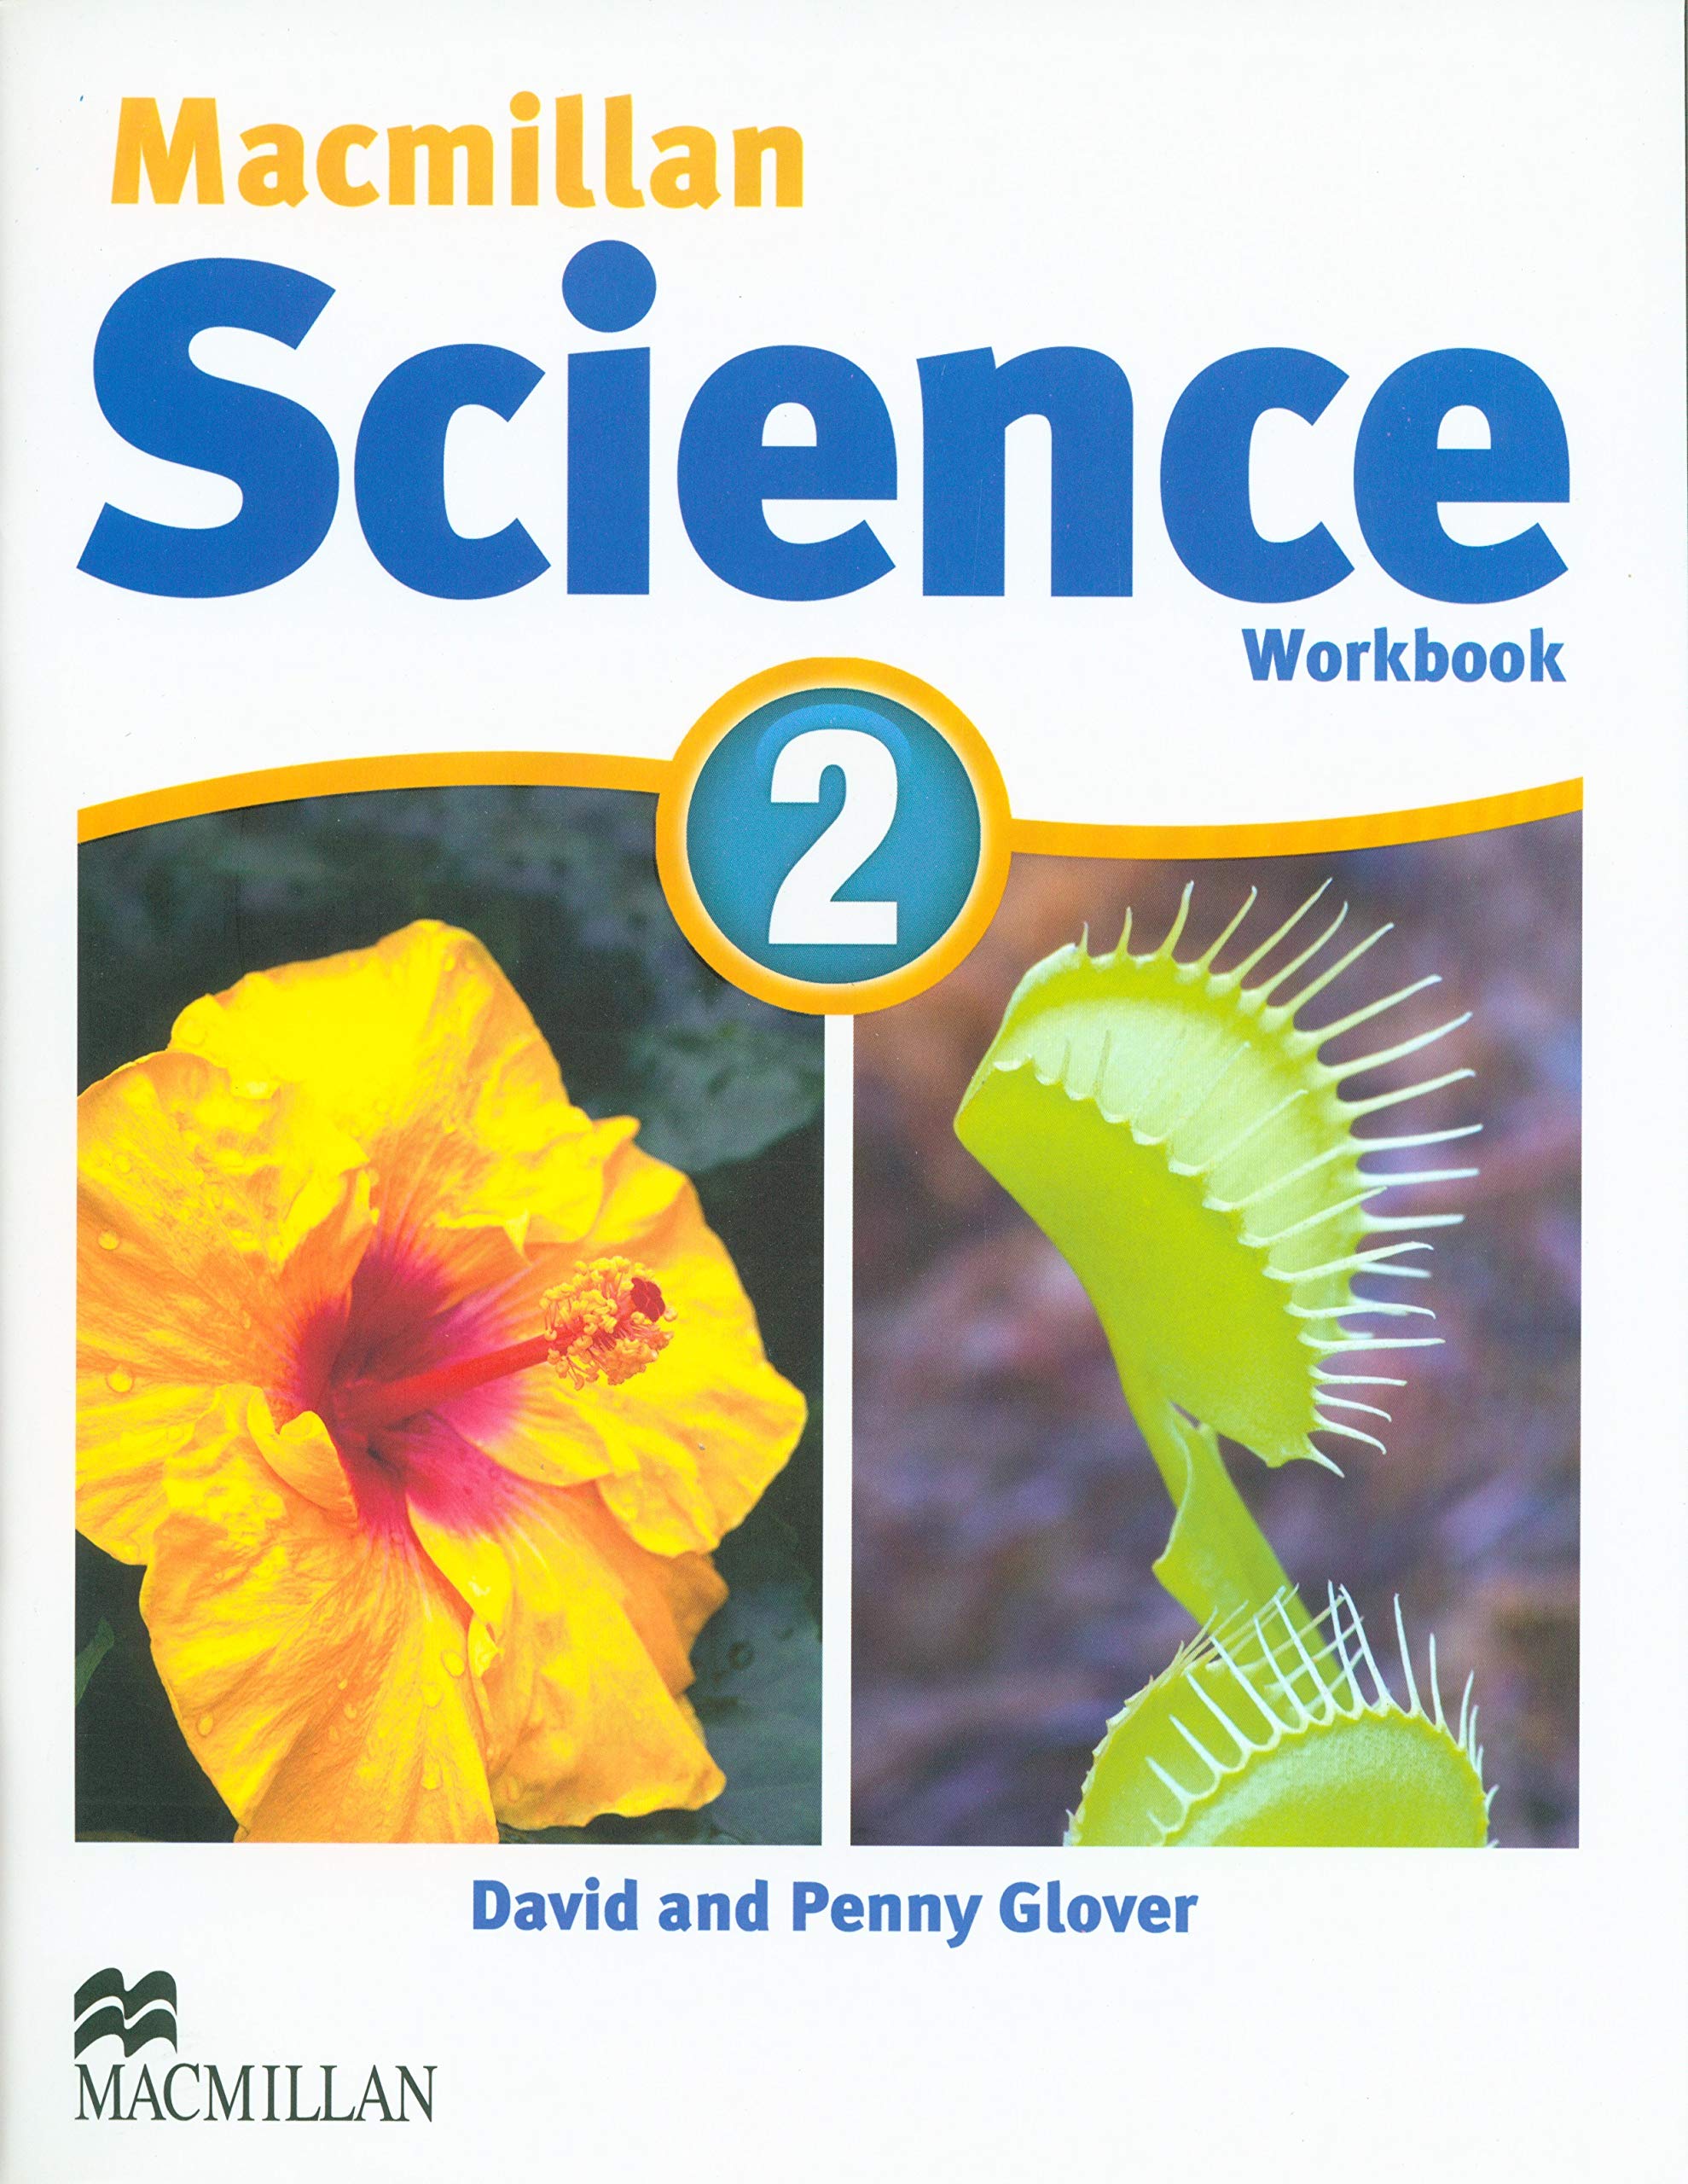 Macmillan Science 2: Workbook